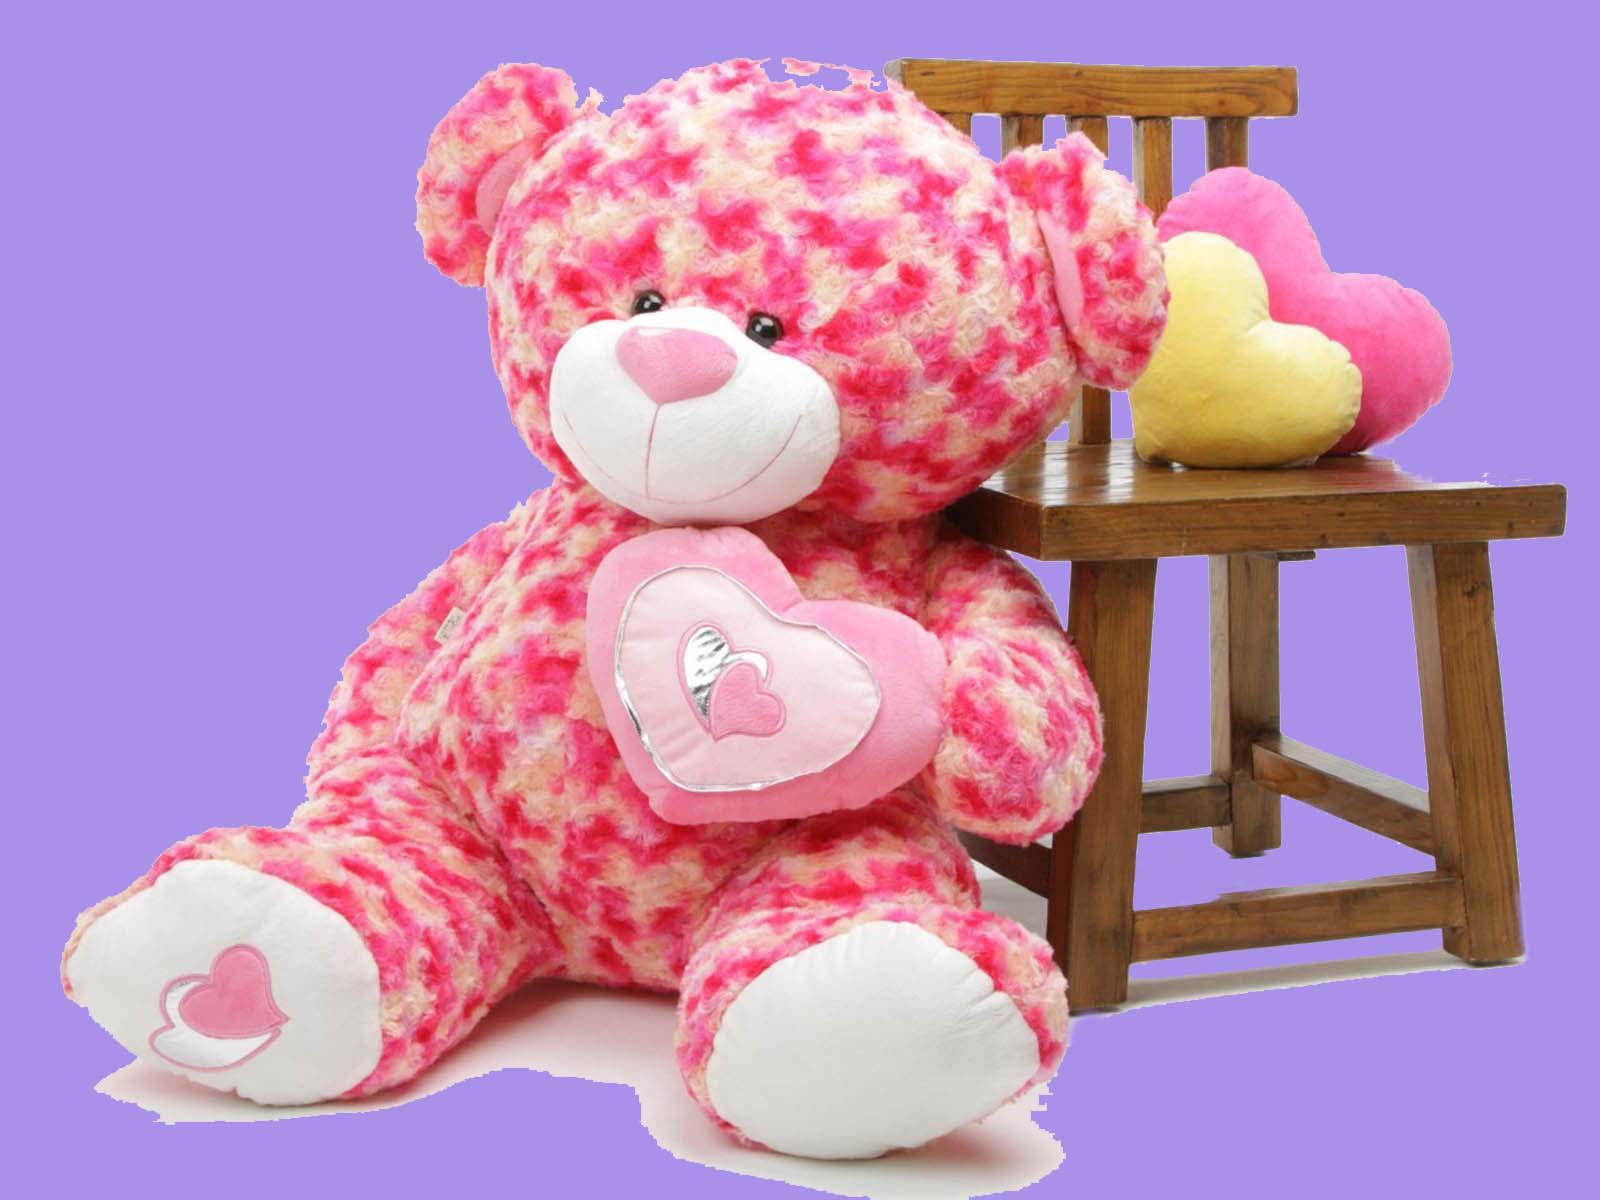 sweet animated teddy bear wallpaper for desktop Teddy Bear